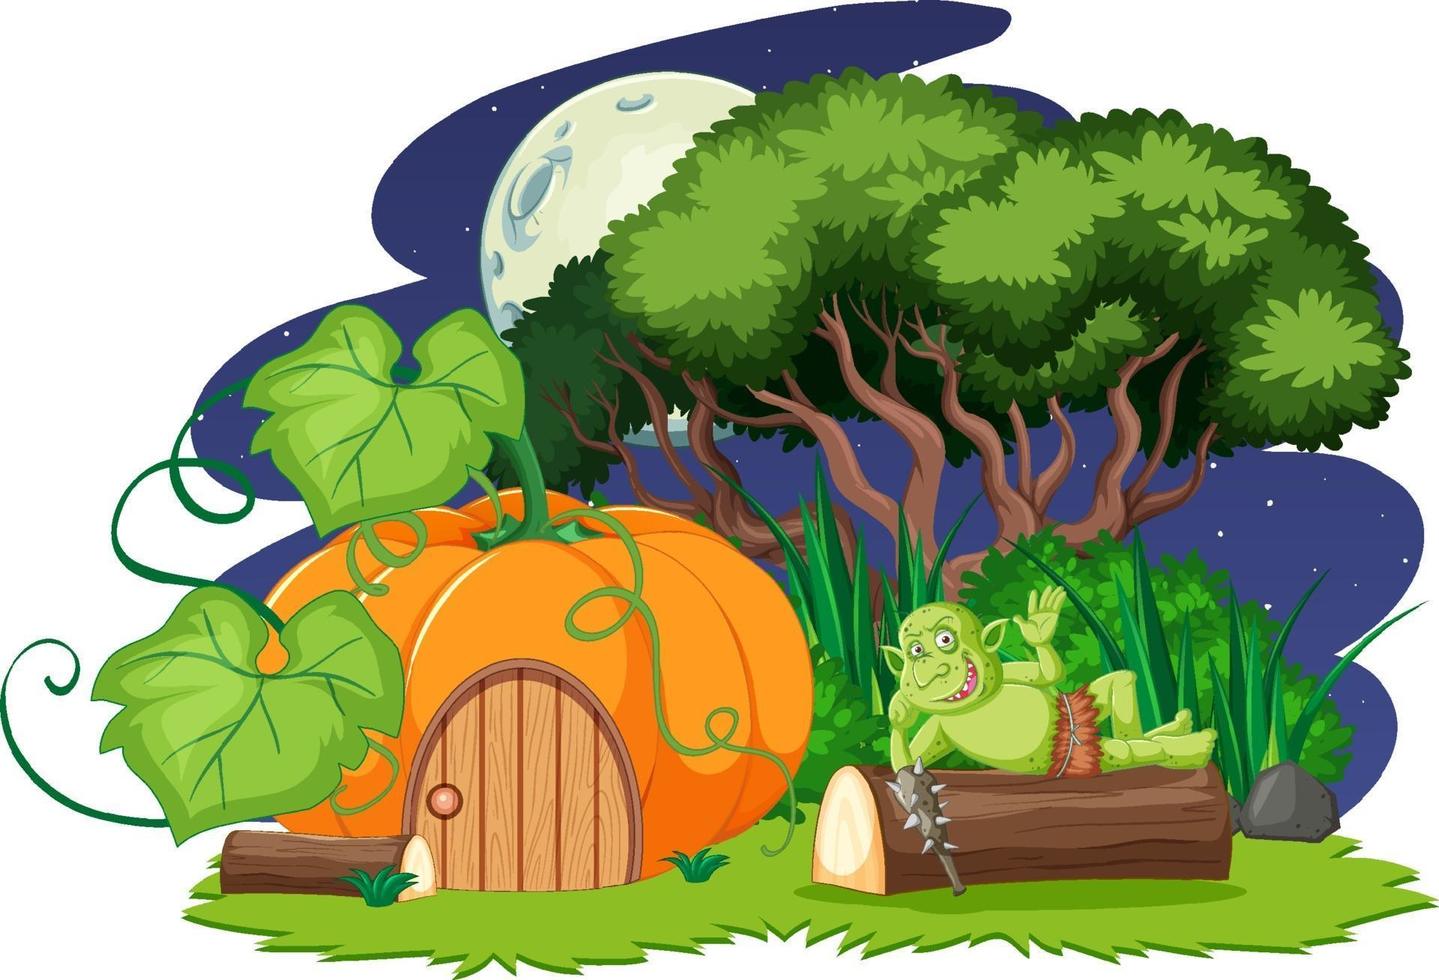 Night scene with goblin or troll cartoon character and pumpkin house vector